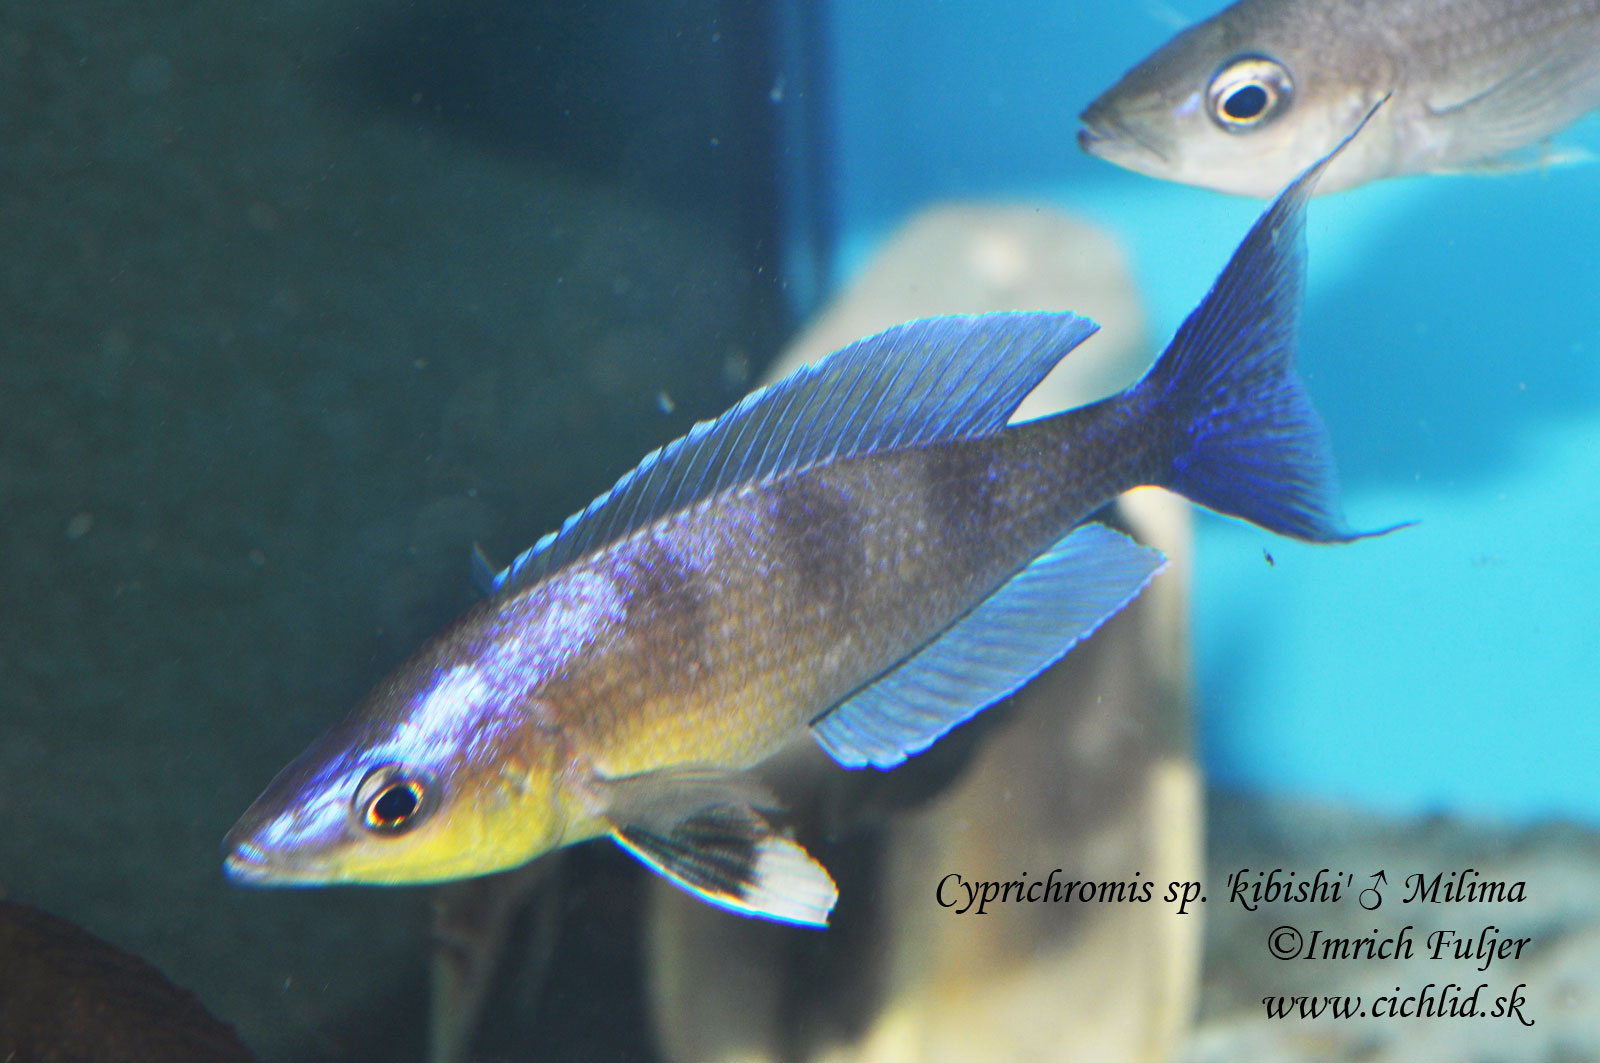 Cyprichromis sp. kibishi Milima 9